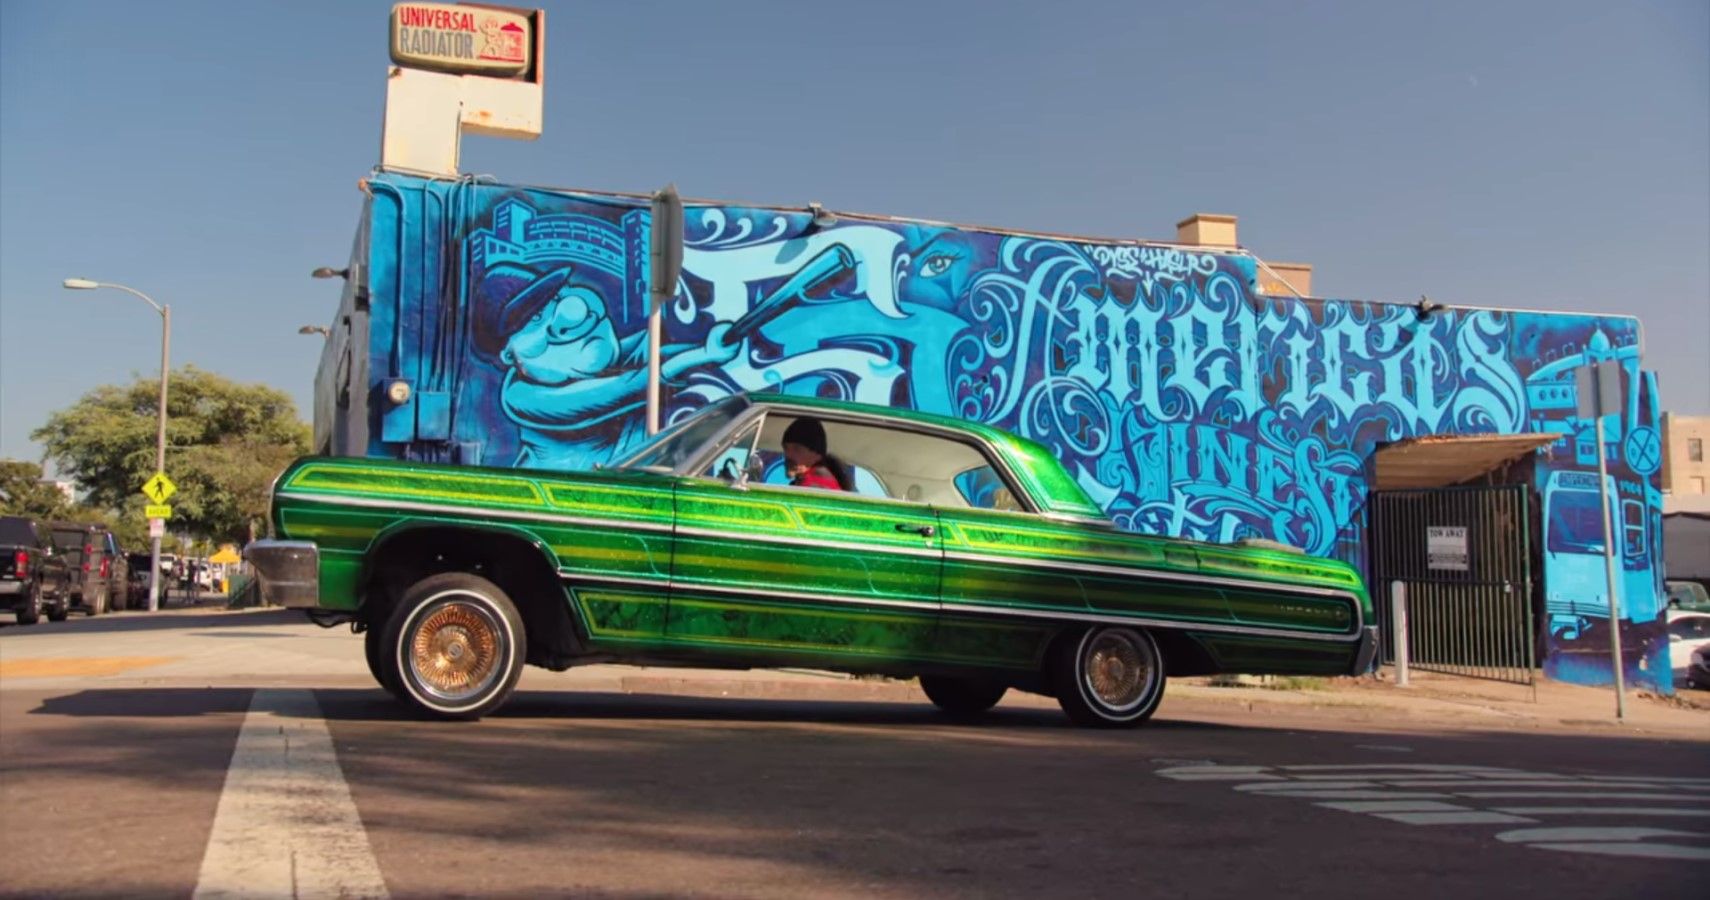 Chevy Impala lowrider by Gotham Garage